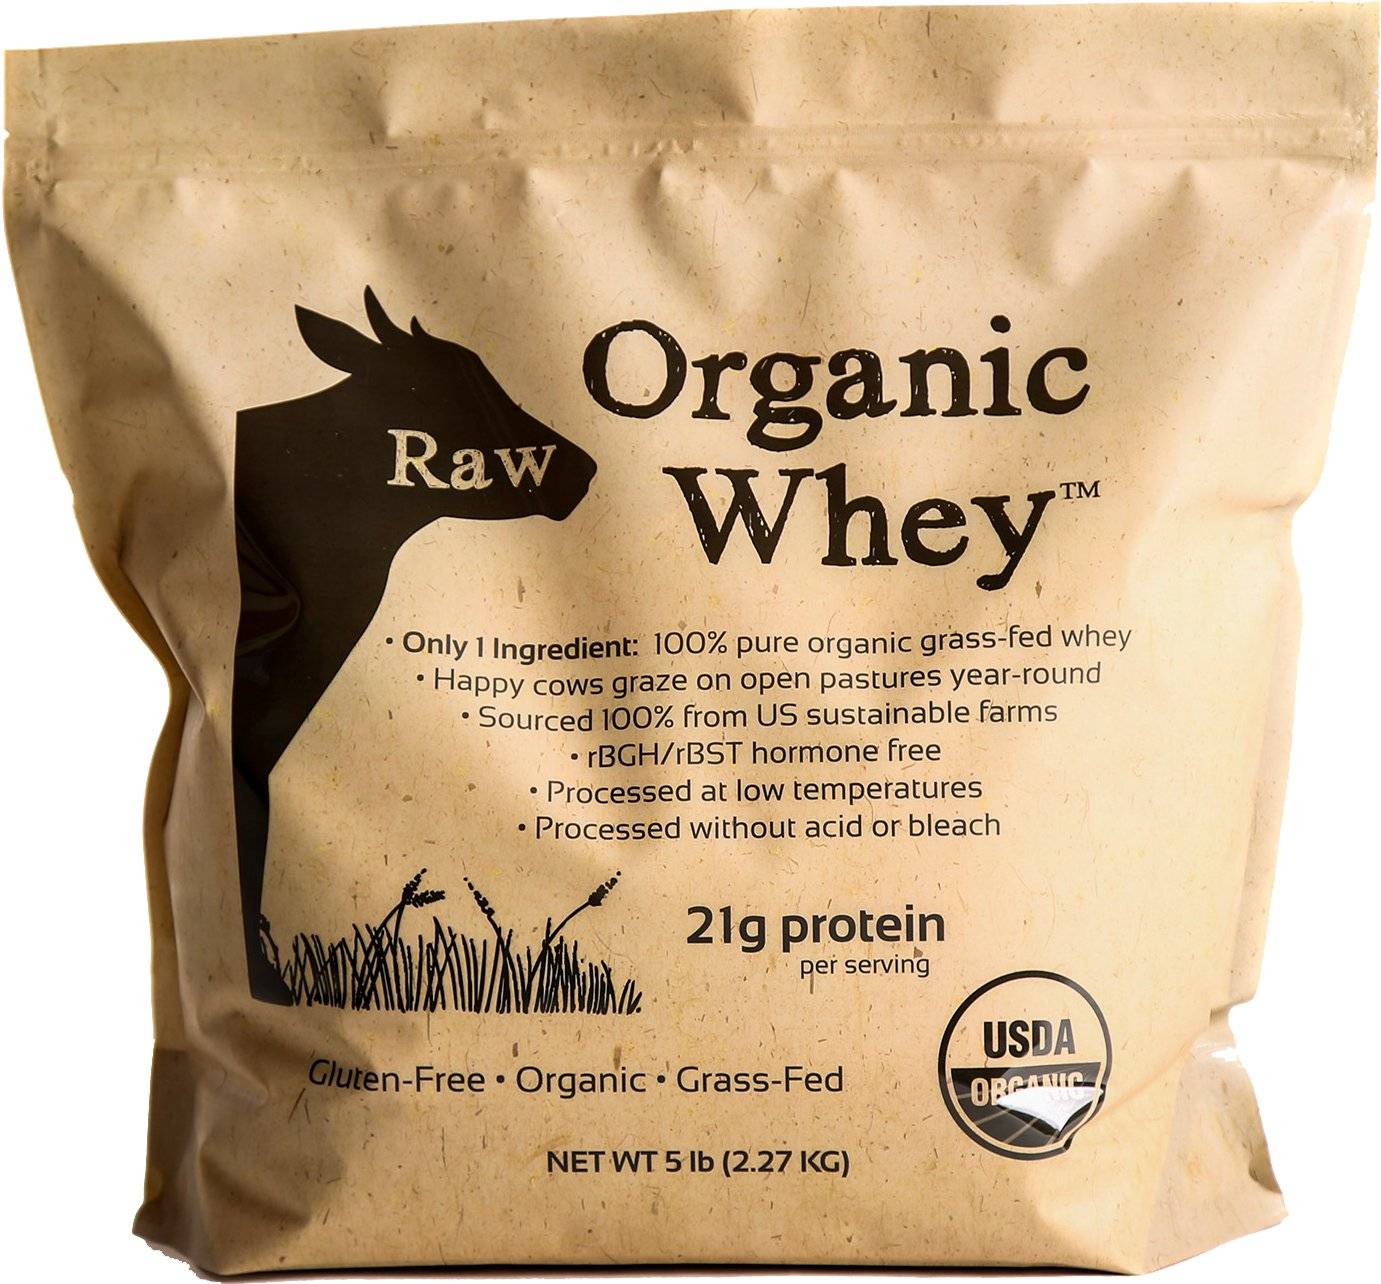 Raw Organic Whey